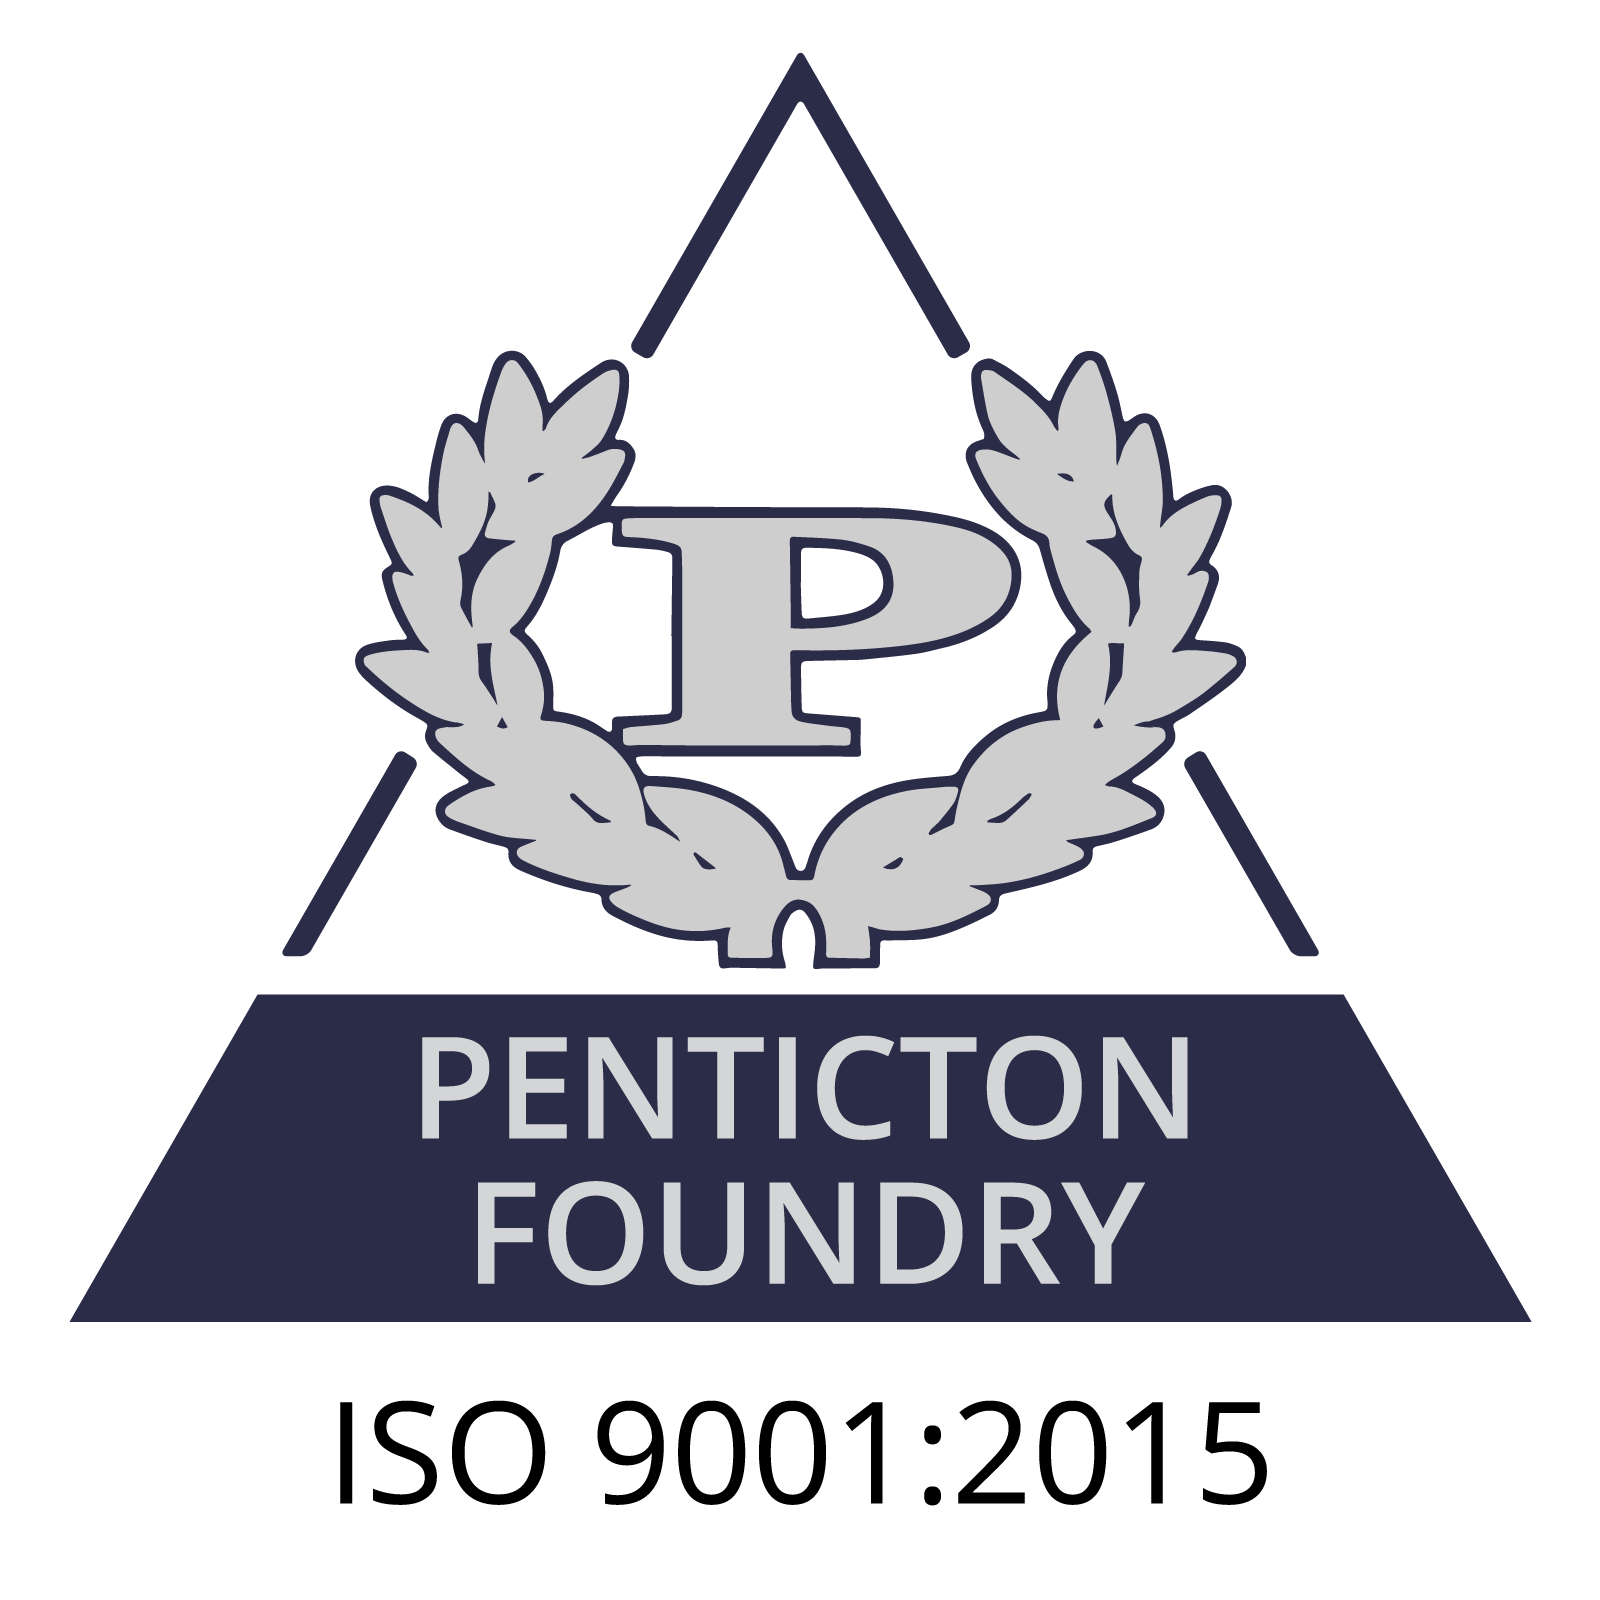 penticton-foundry-logo.jpg